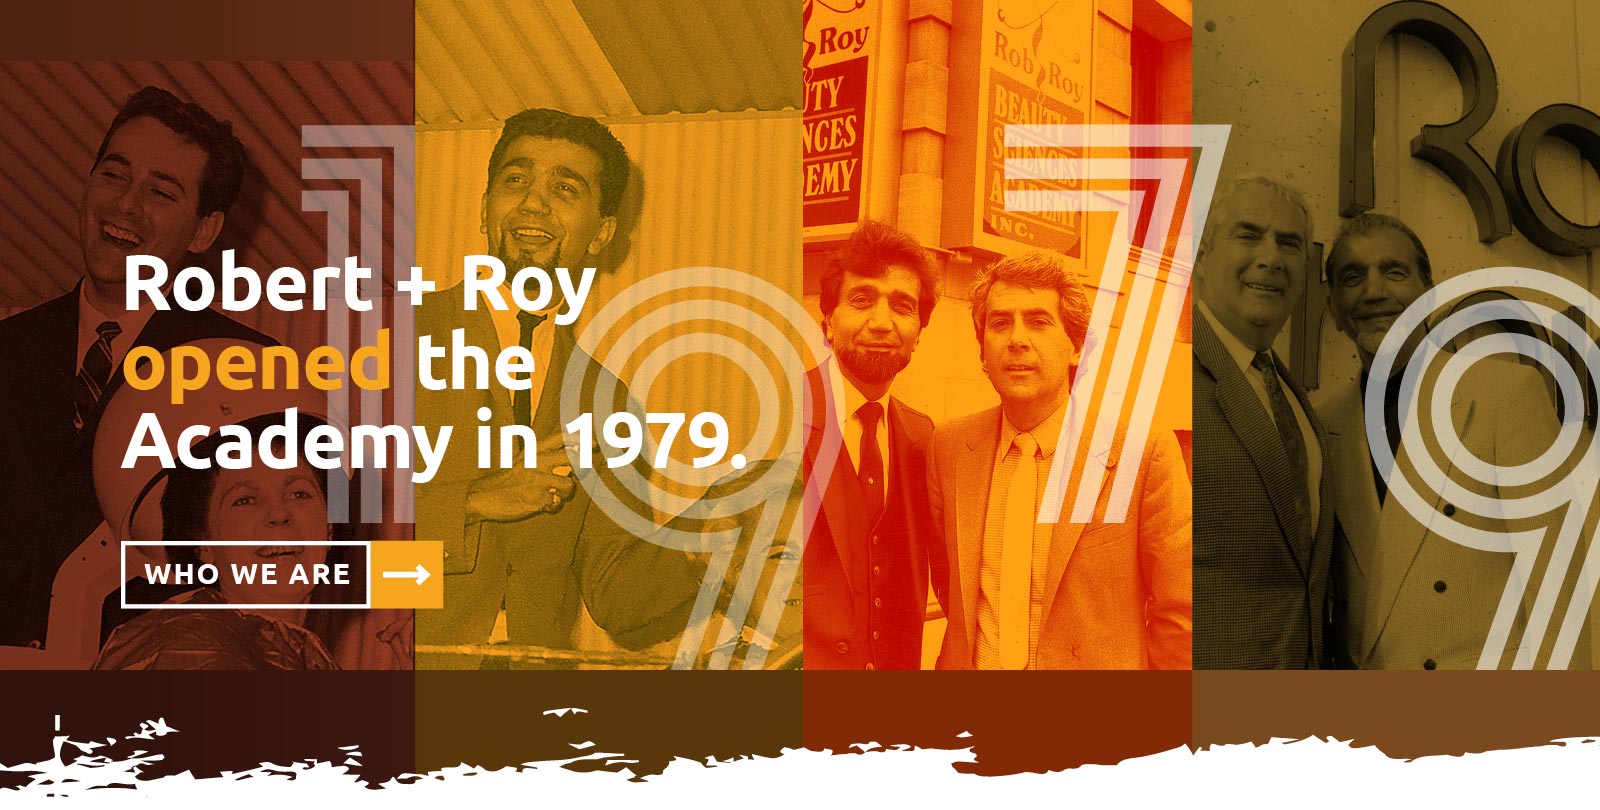 Robert + Roy opened the Academy in 1979